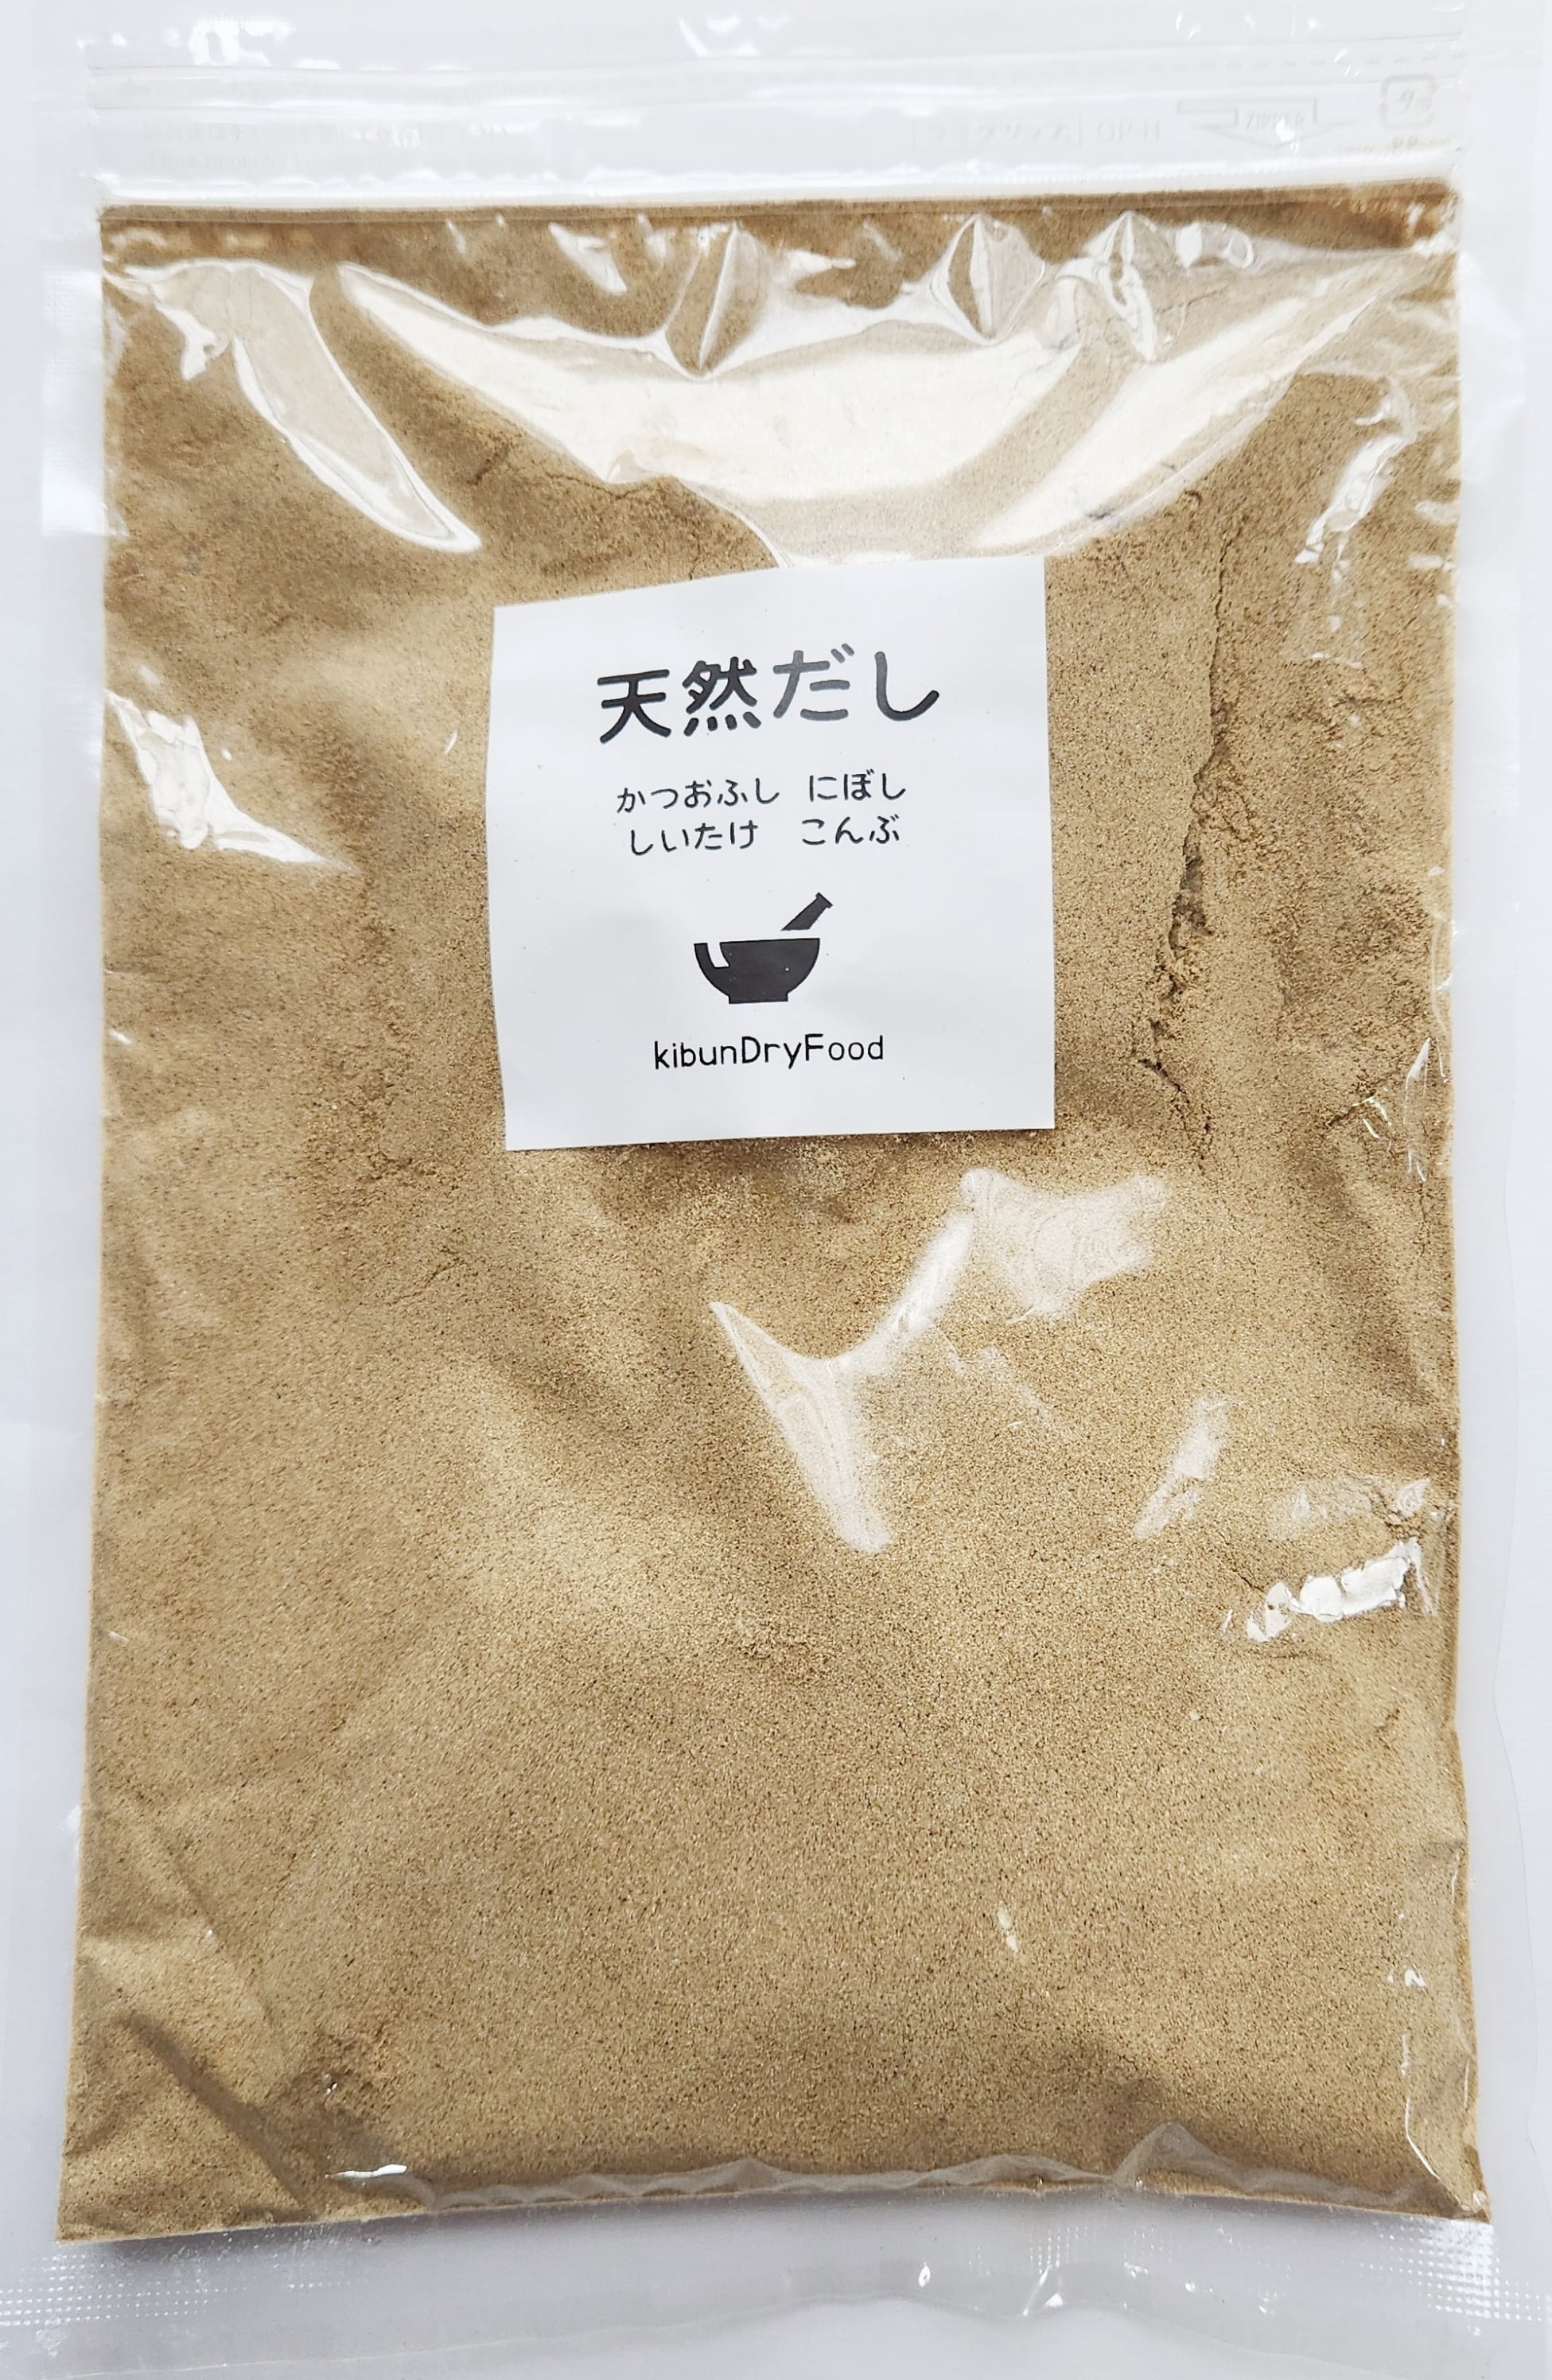 By　Produced　カフェキブン　dry　food　国内産・無添加　100ｇ680円　天然だし　kibun